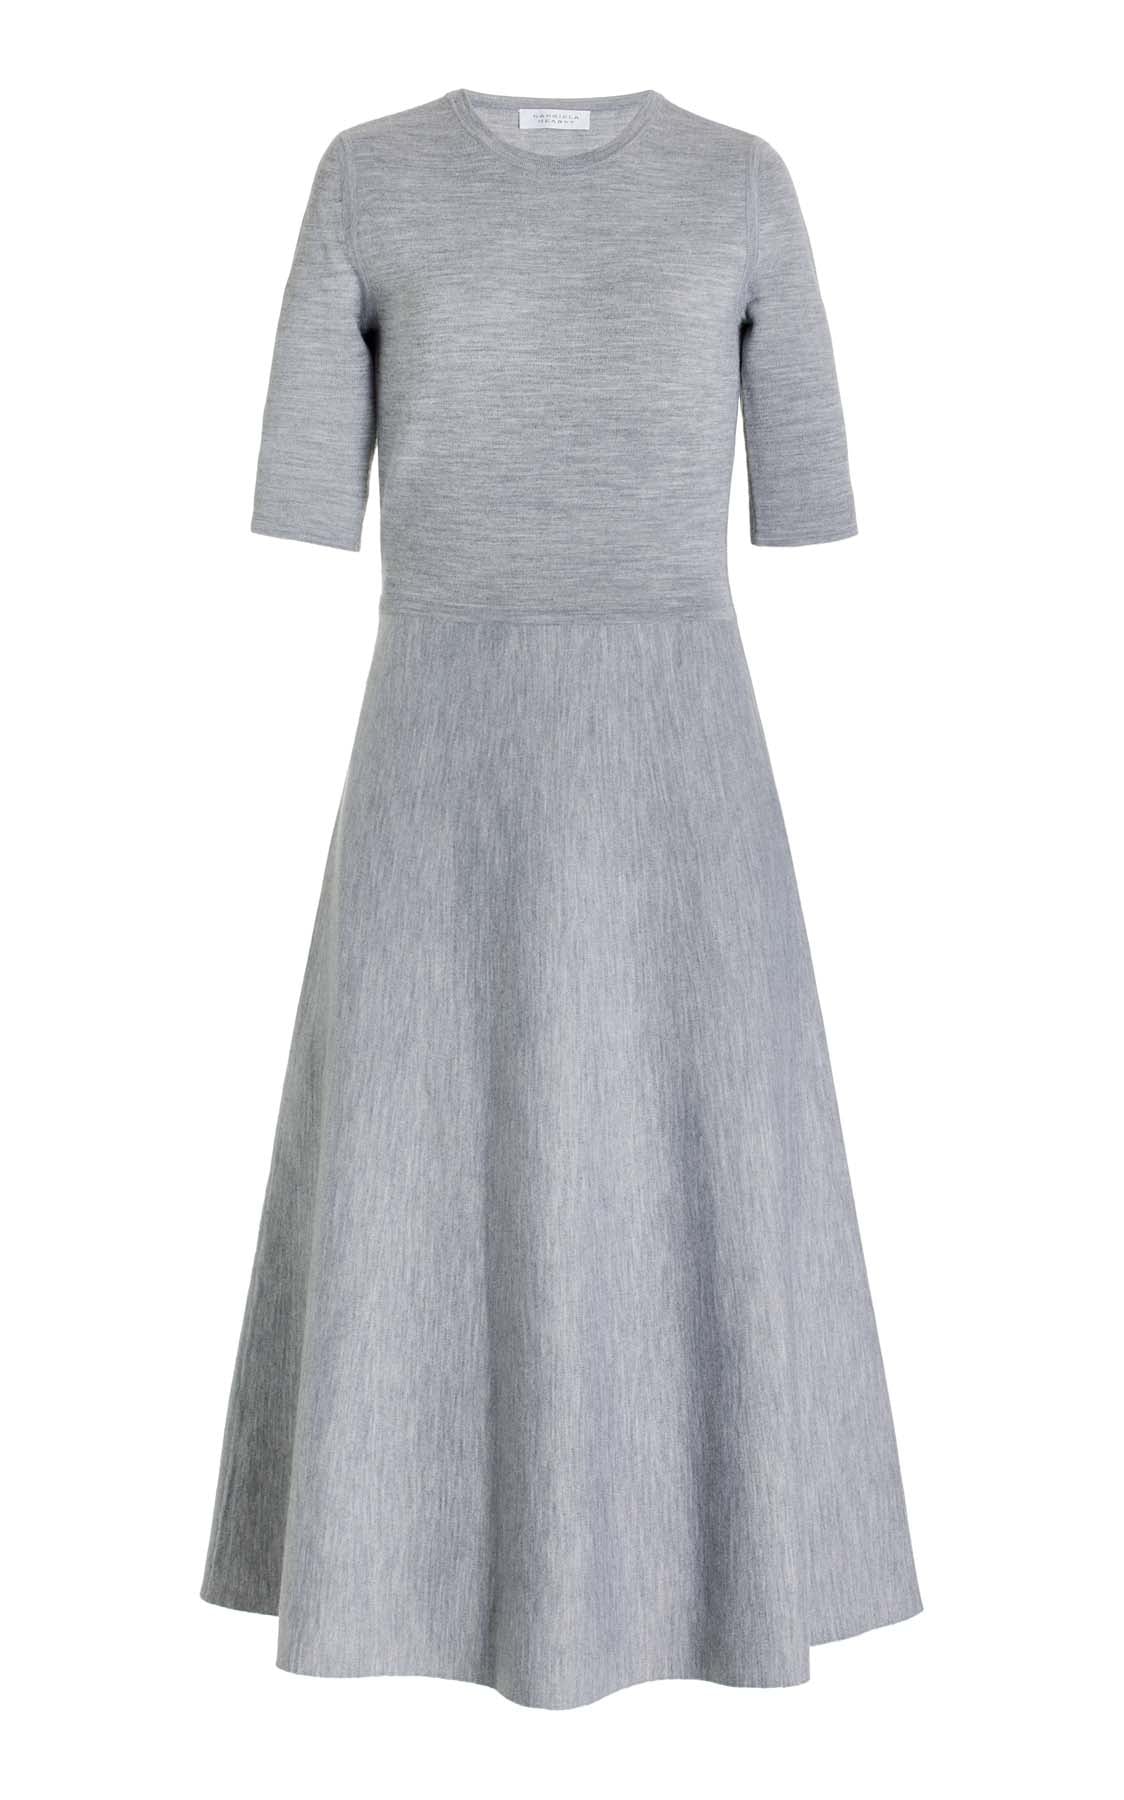 Seymore Knit Dress in Heather Grey Cashmere Silk Wool